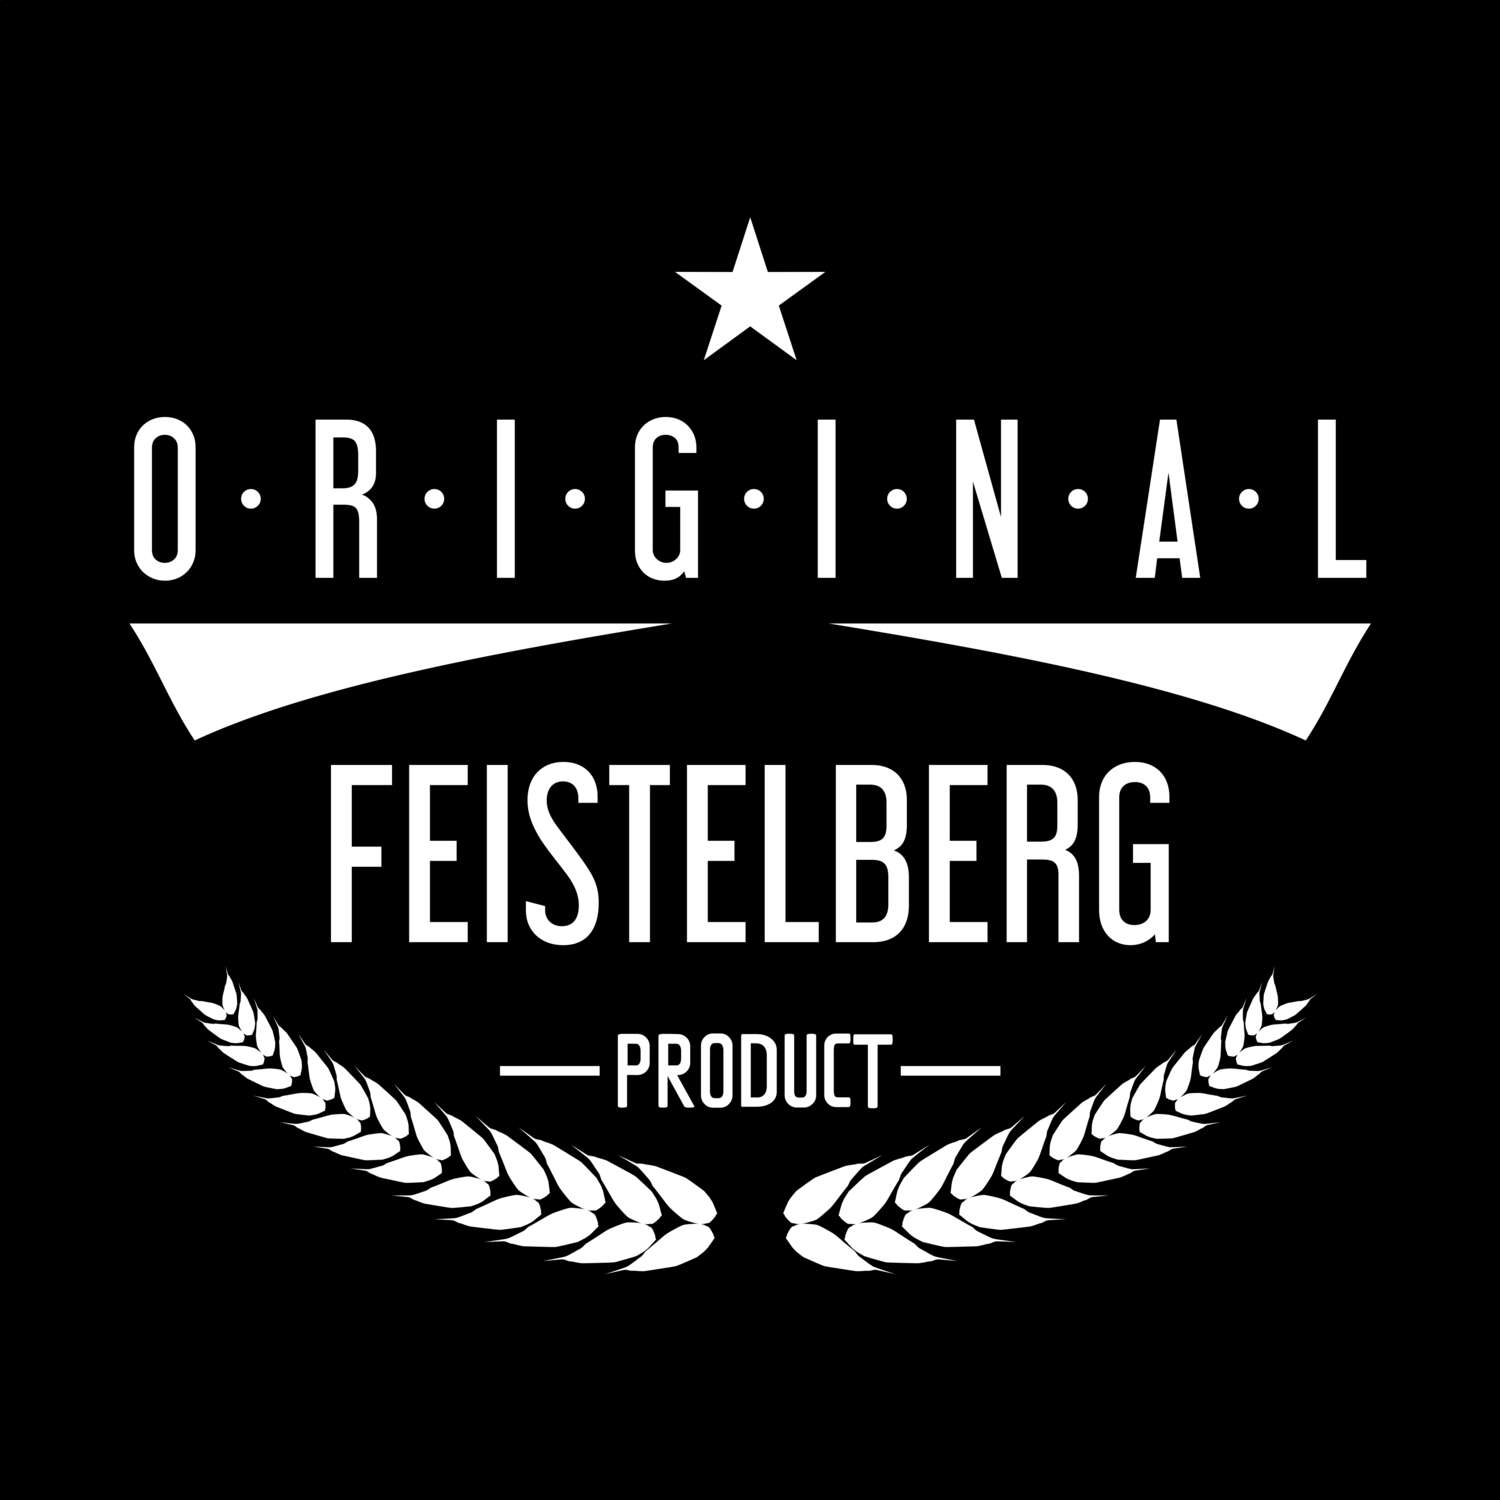 Feistelberg T-Shirt »Original Product«